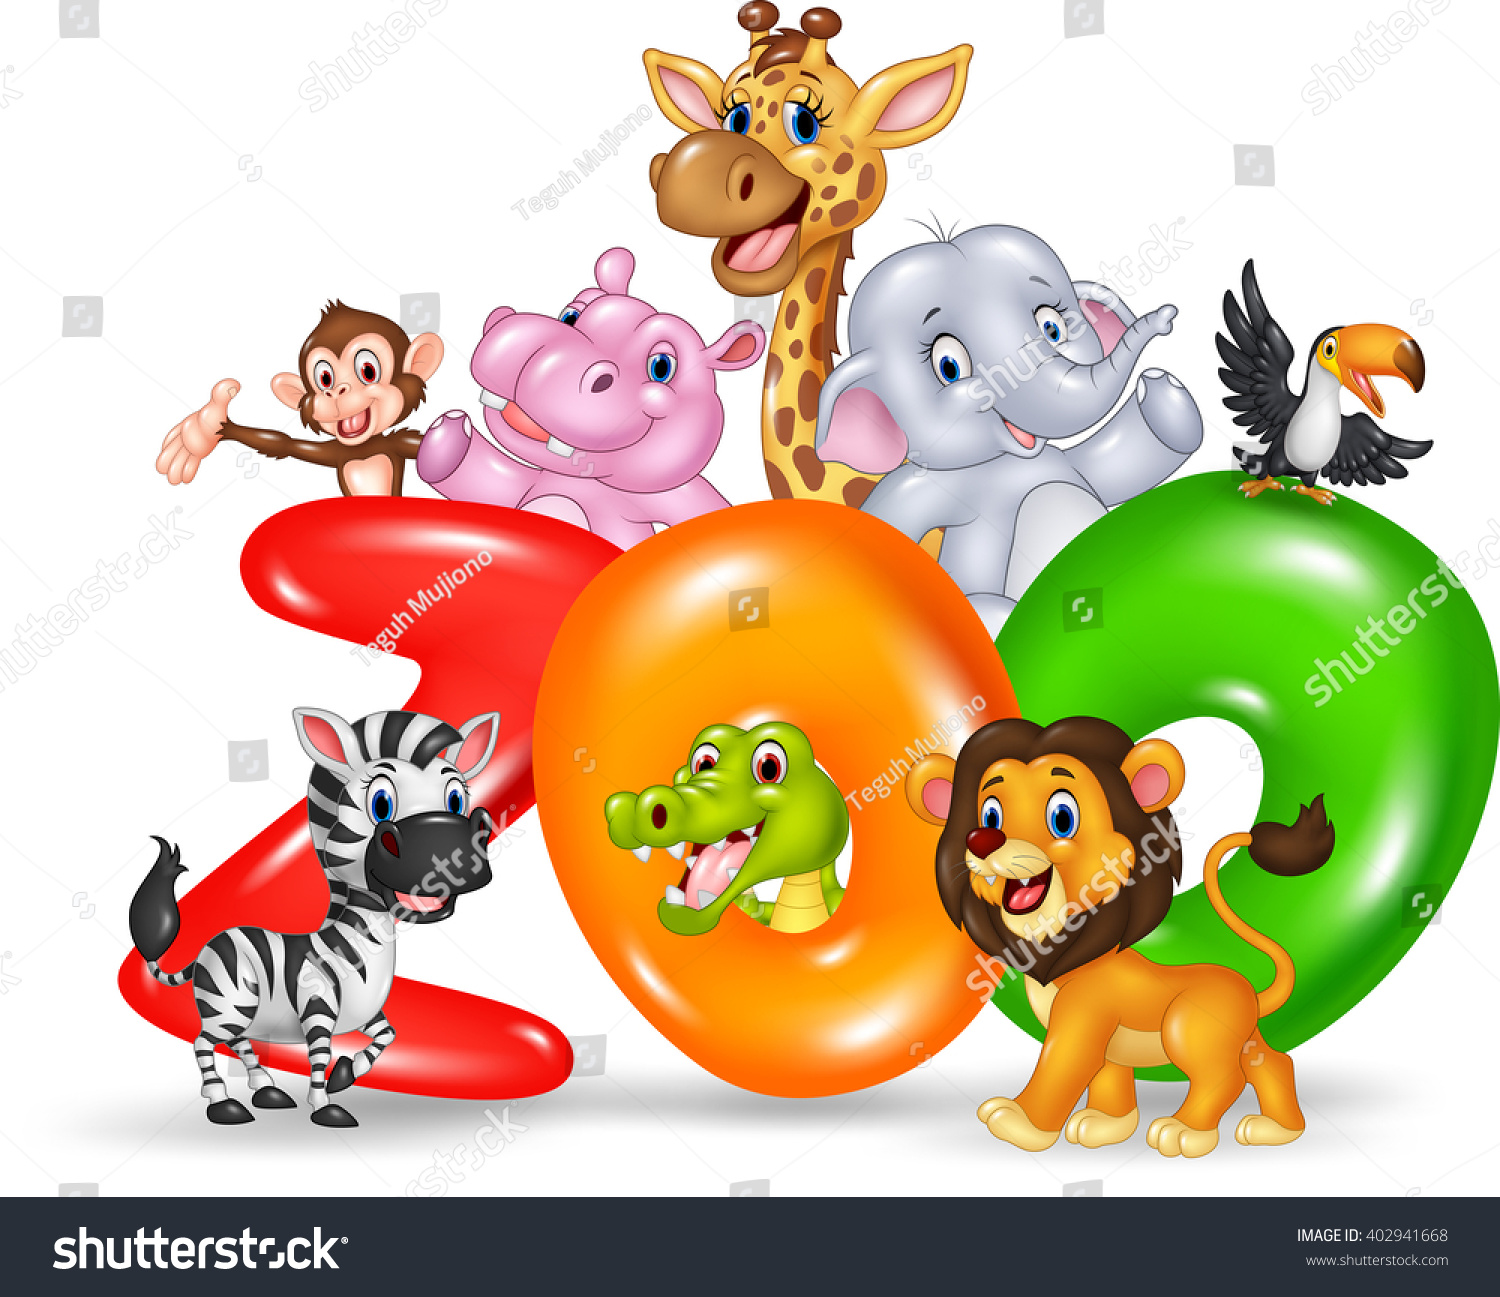 Word Zoo Cartoon Wild Animal Africa Stock Vector 402941668 ...